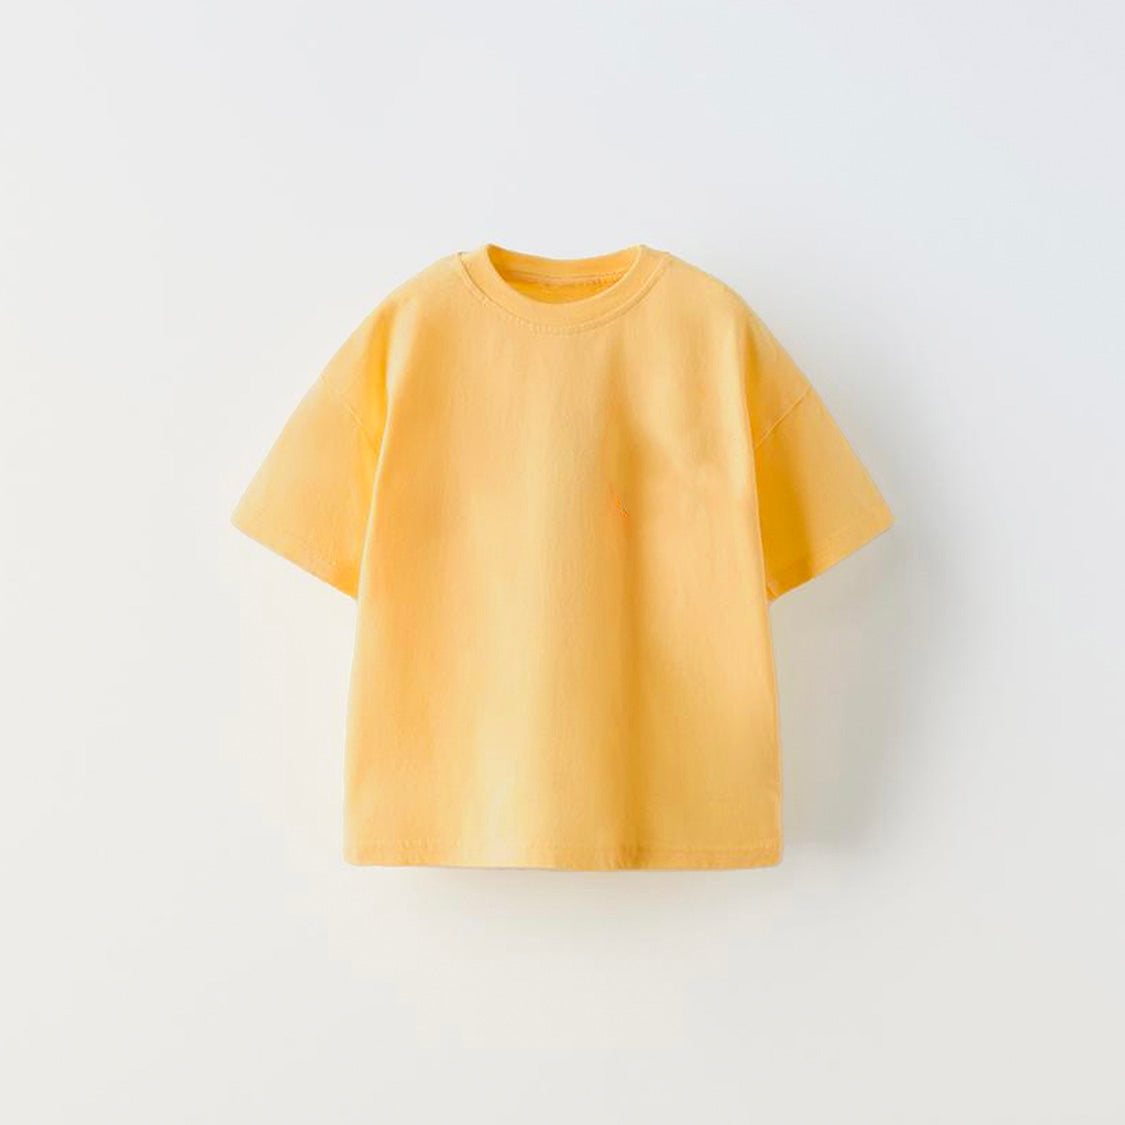 Customised Baby T-Shirt (0-4 Yrs) - Mustard